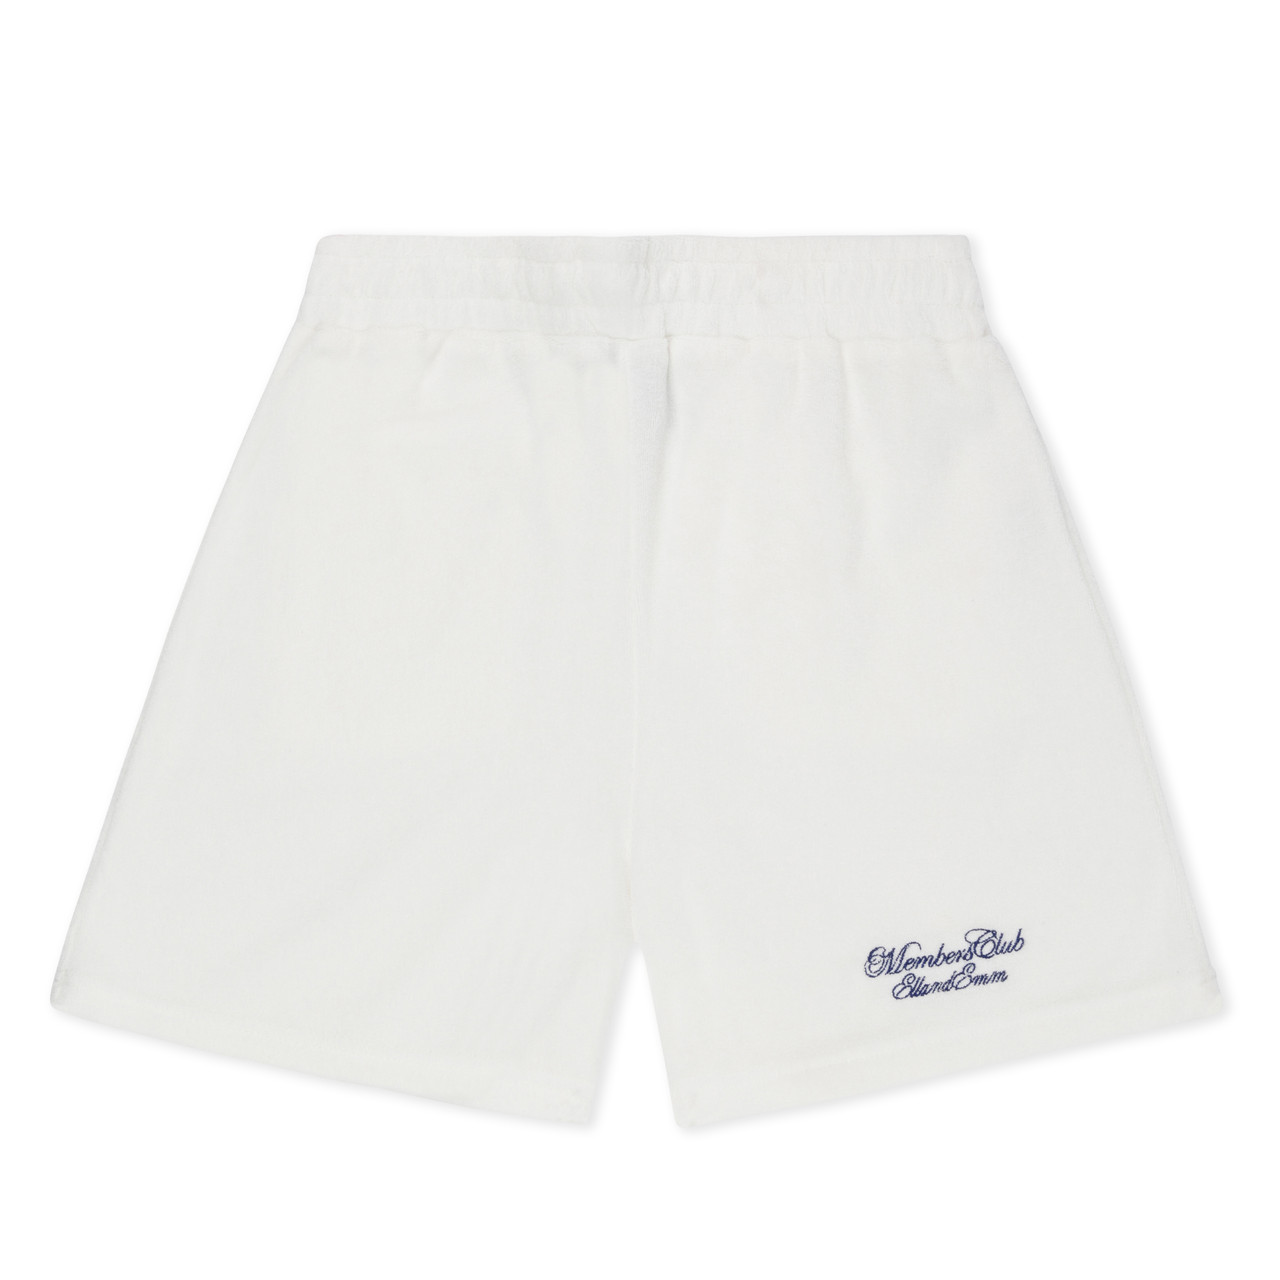 Members Club Terry Cloth shorts - EllandEmm